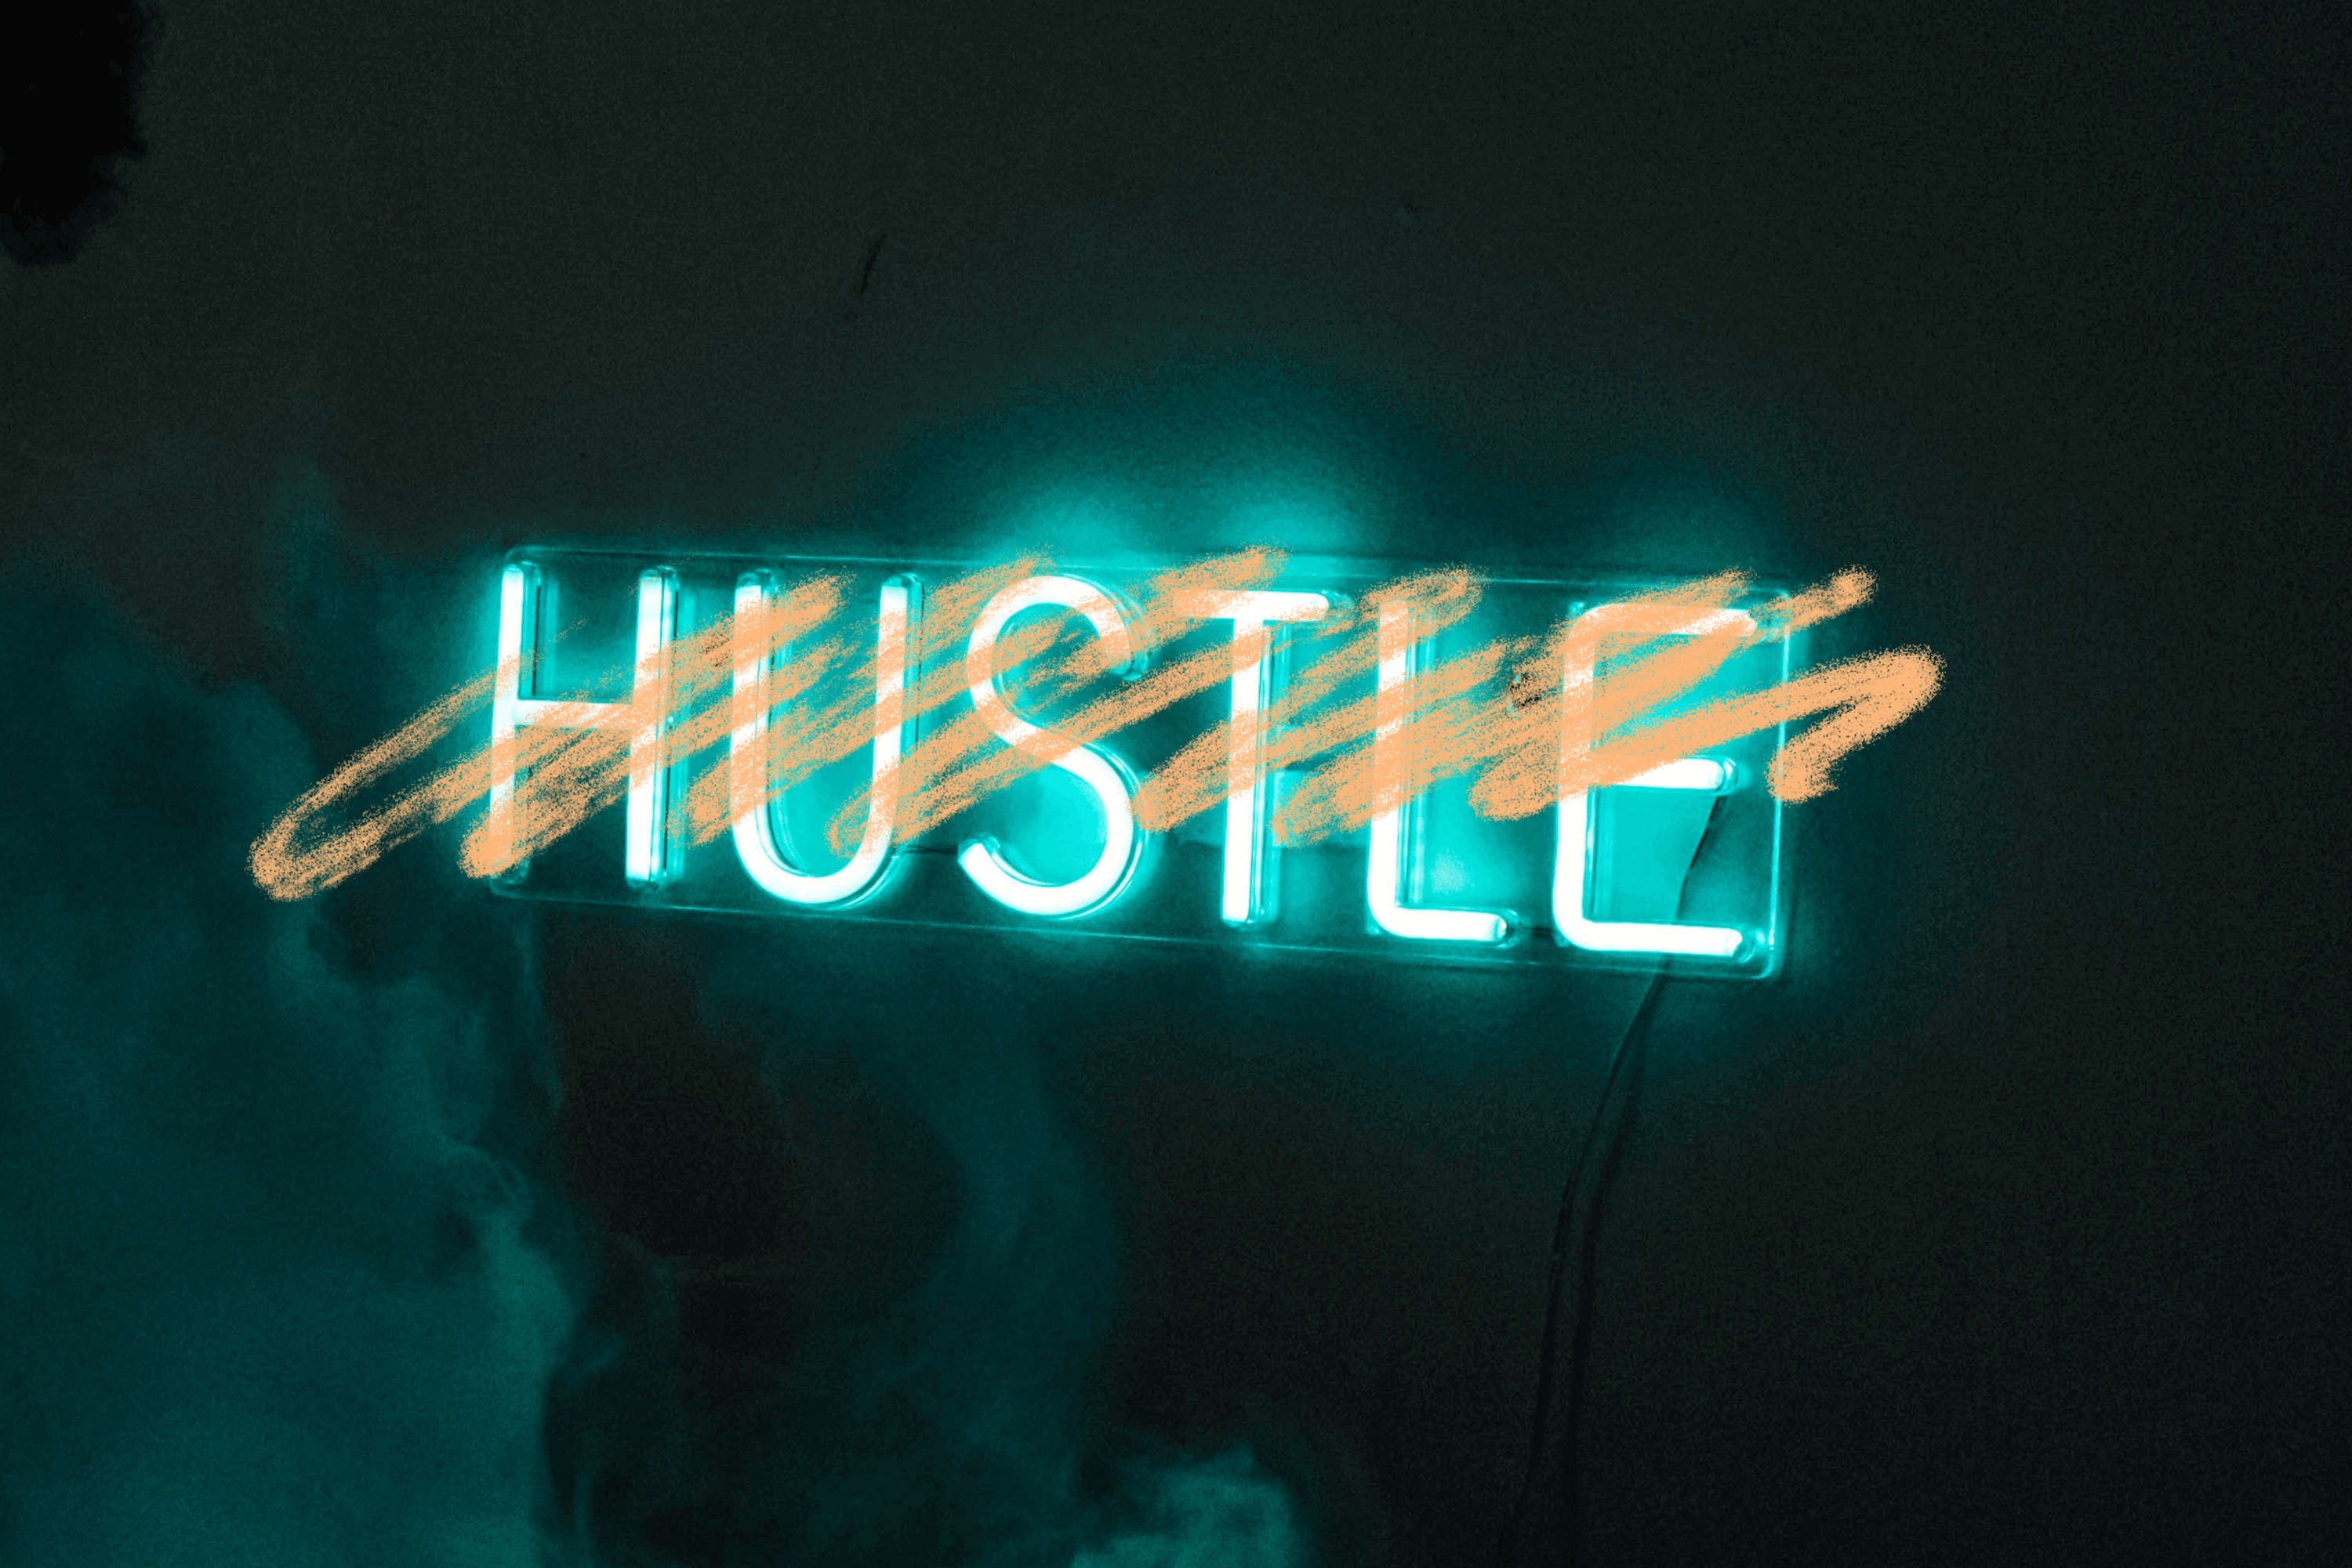 Scribble over hustle